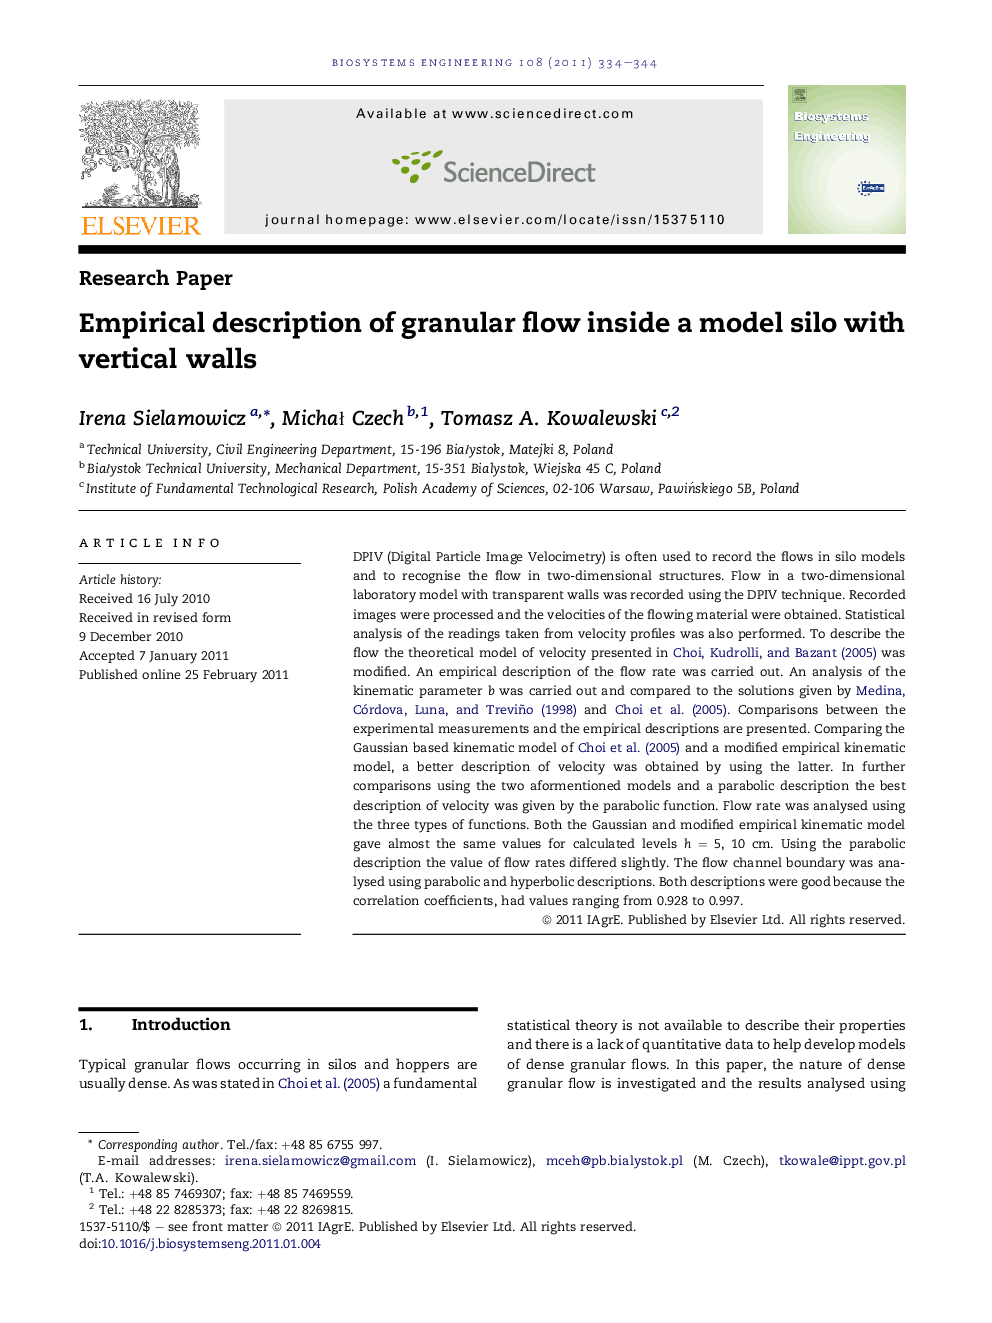 Empirical description of granular flow inside a model silo with vertical walls